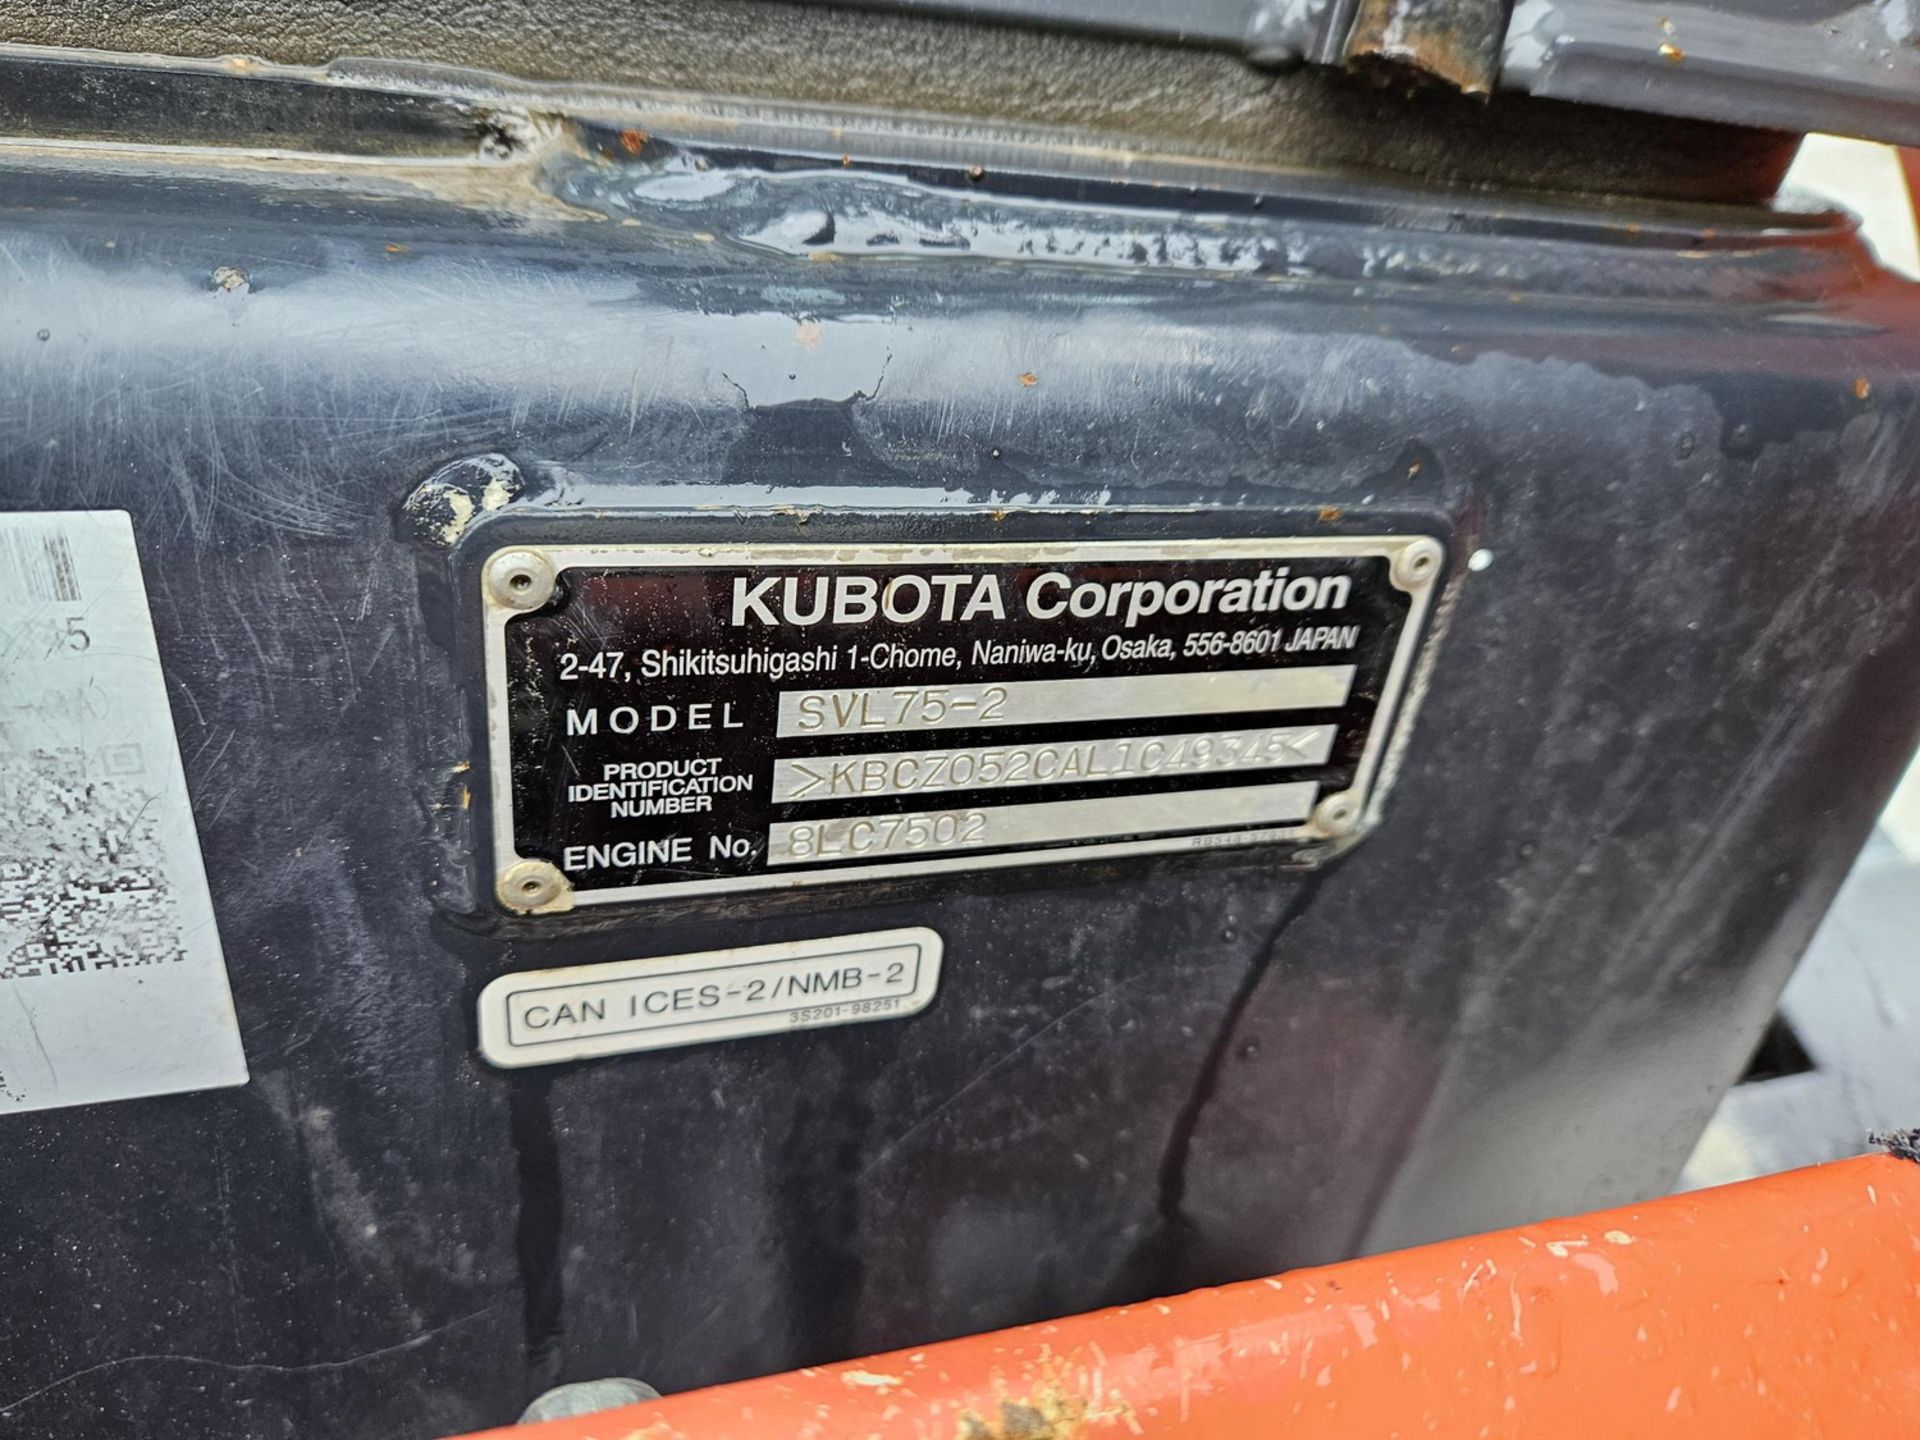 2019 KUBOTA SVL75-2 TRACK SKID STEER LOADER, S/N 49345 (1,507 HRS) C/W KUBOTA S6612 72" BUCKET - Image 6 of 6